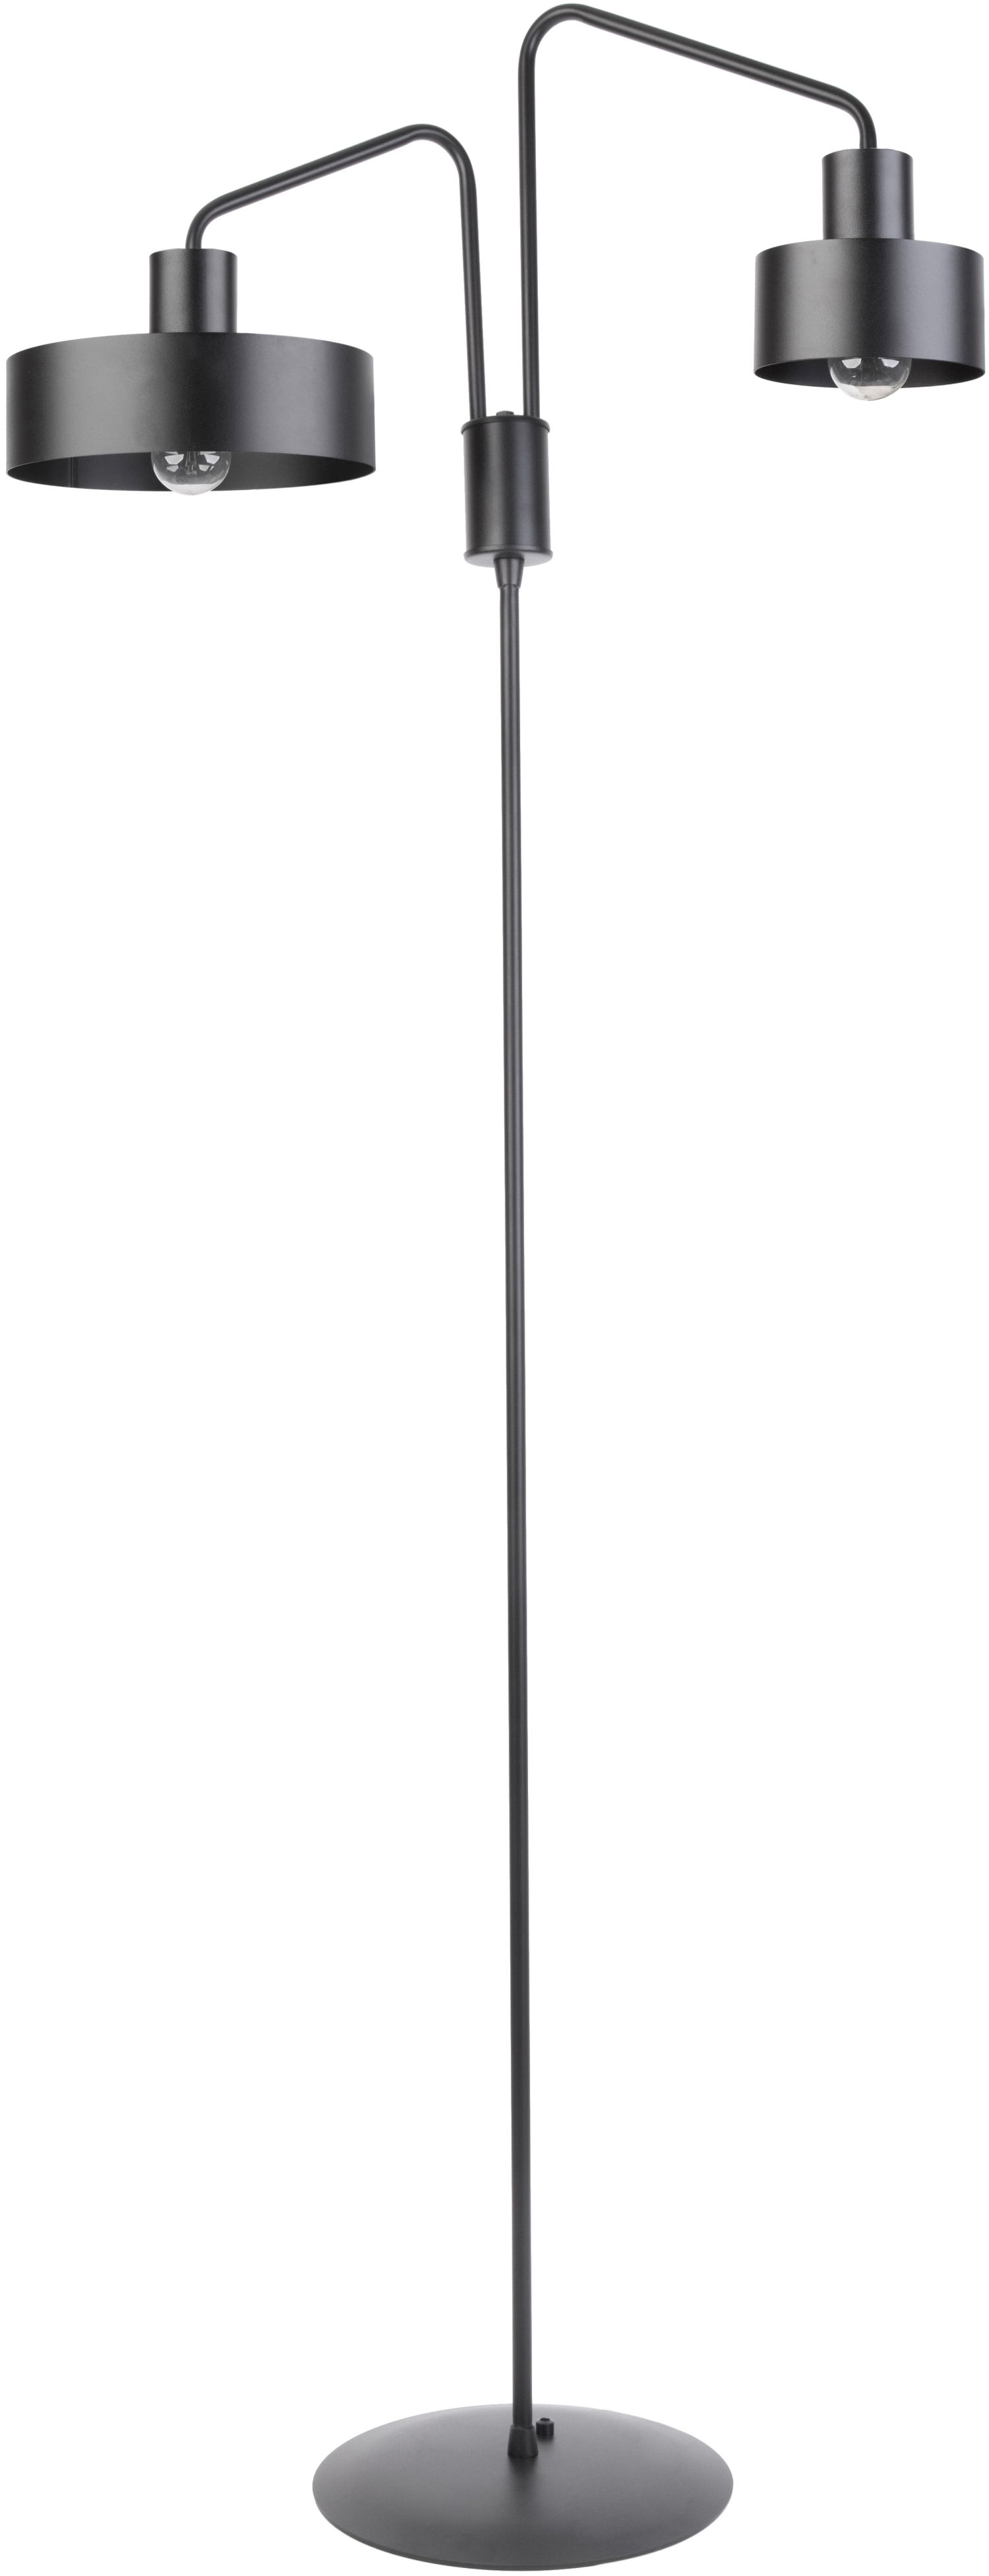 Schwarze Stehlampe Metall groß 174 cm E27 Retro Design